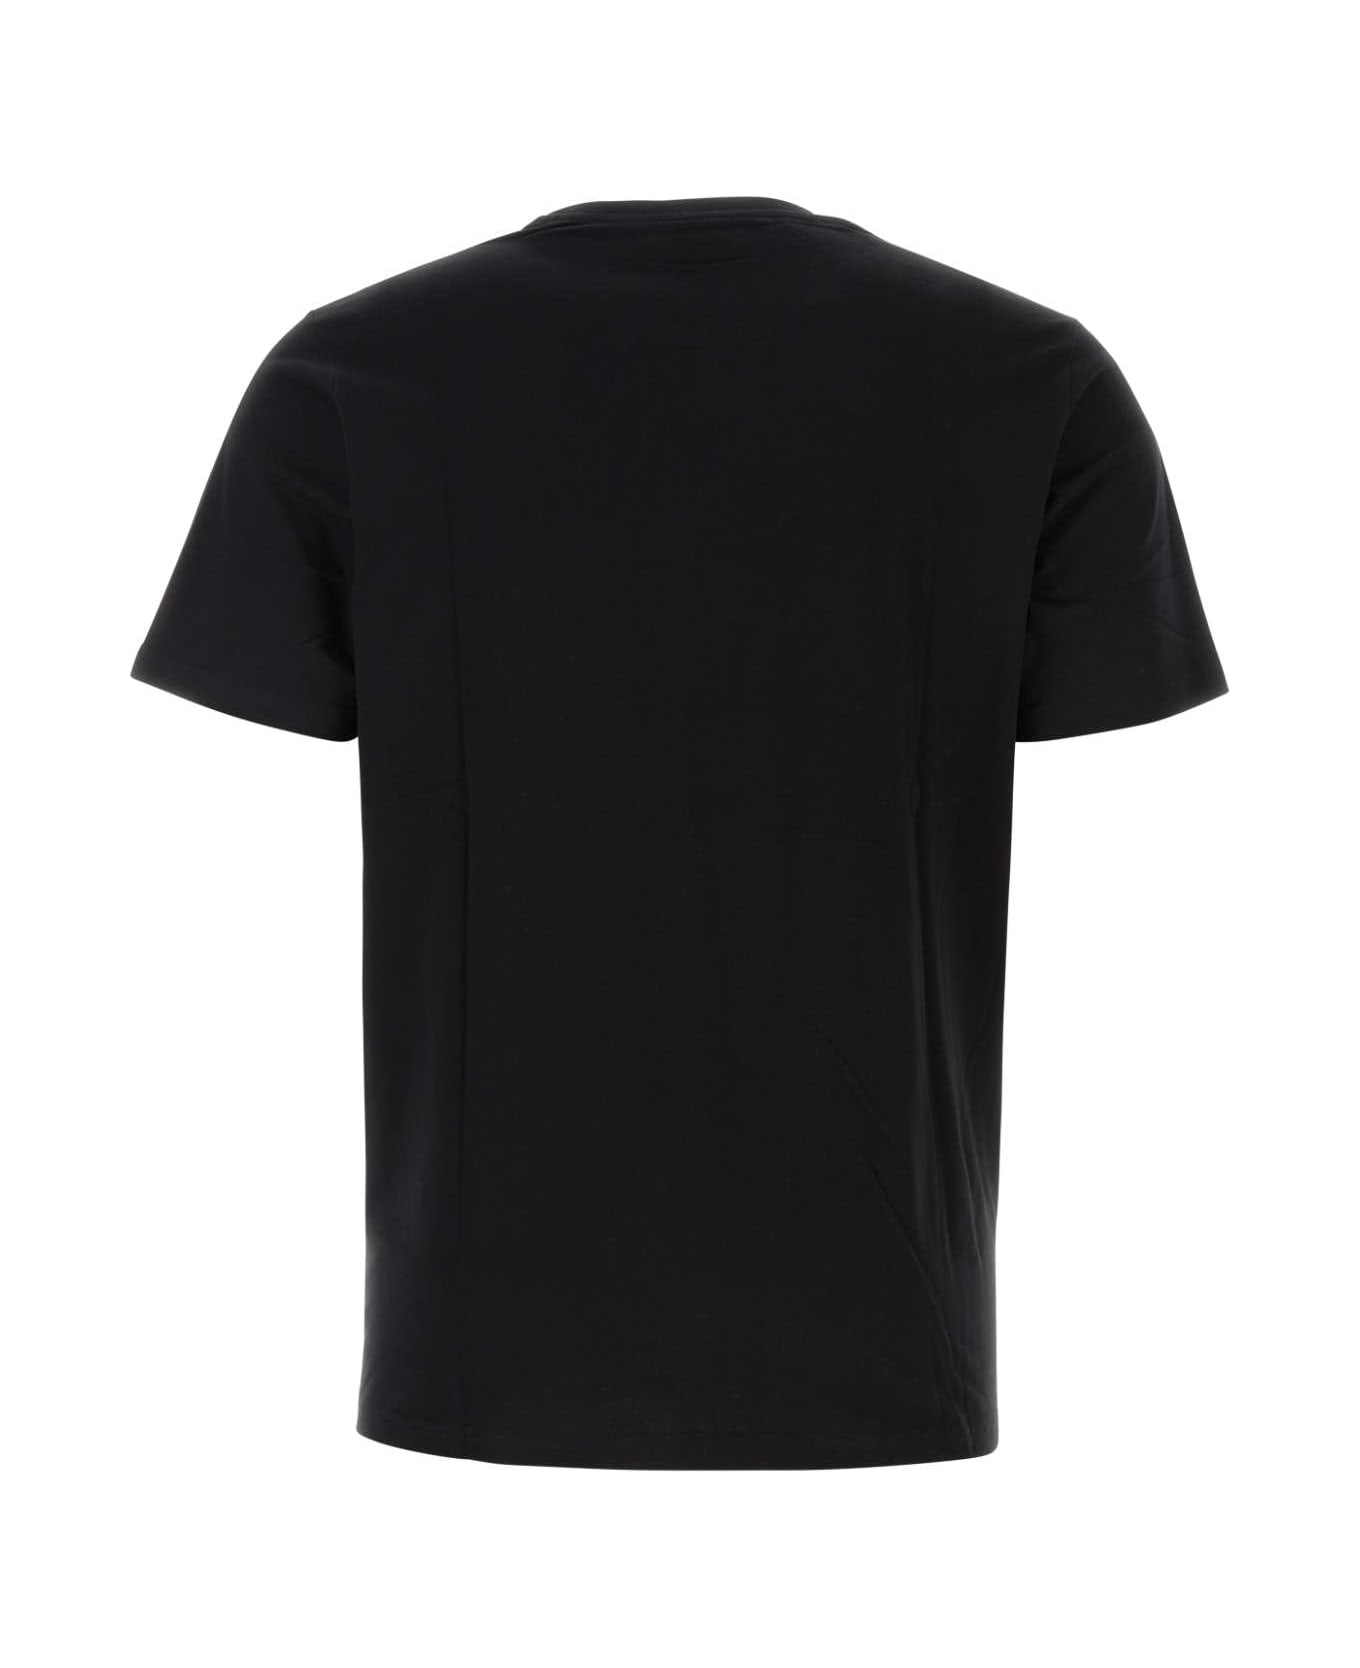 Dickies Black Cotton T-shirt - BLACK